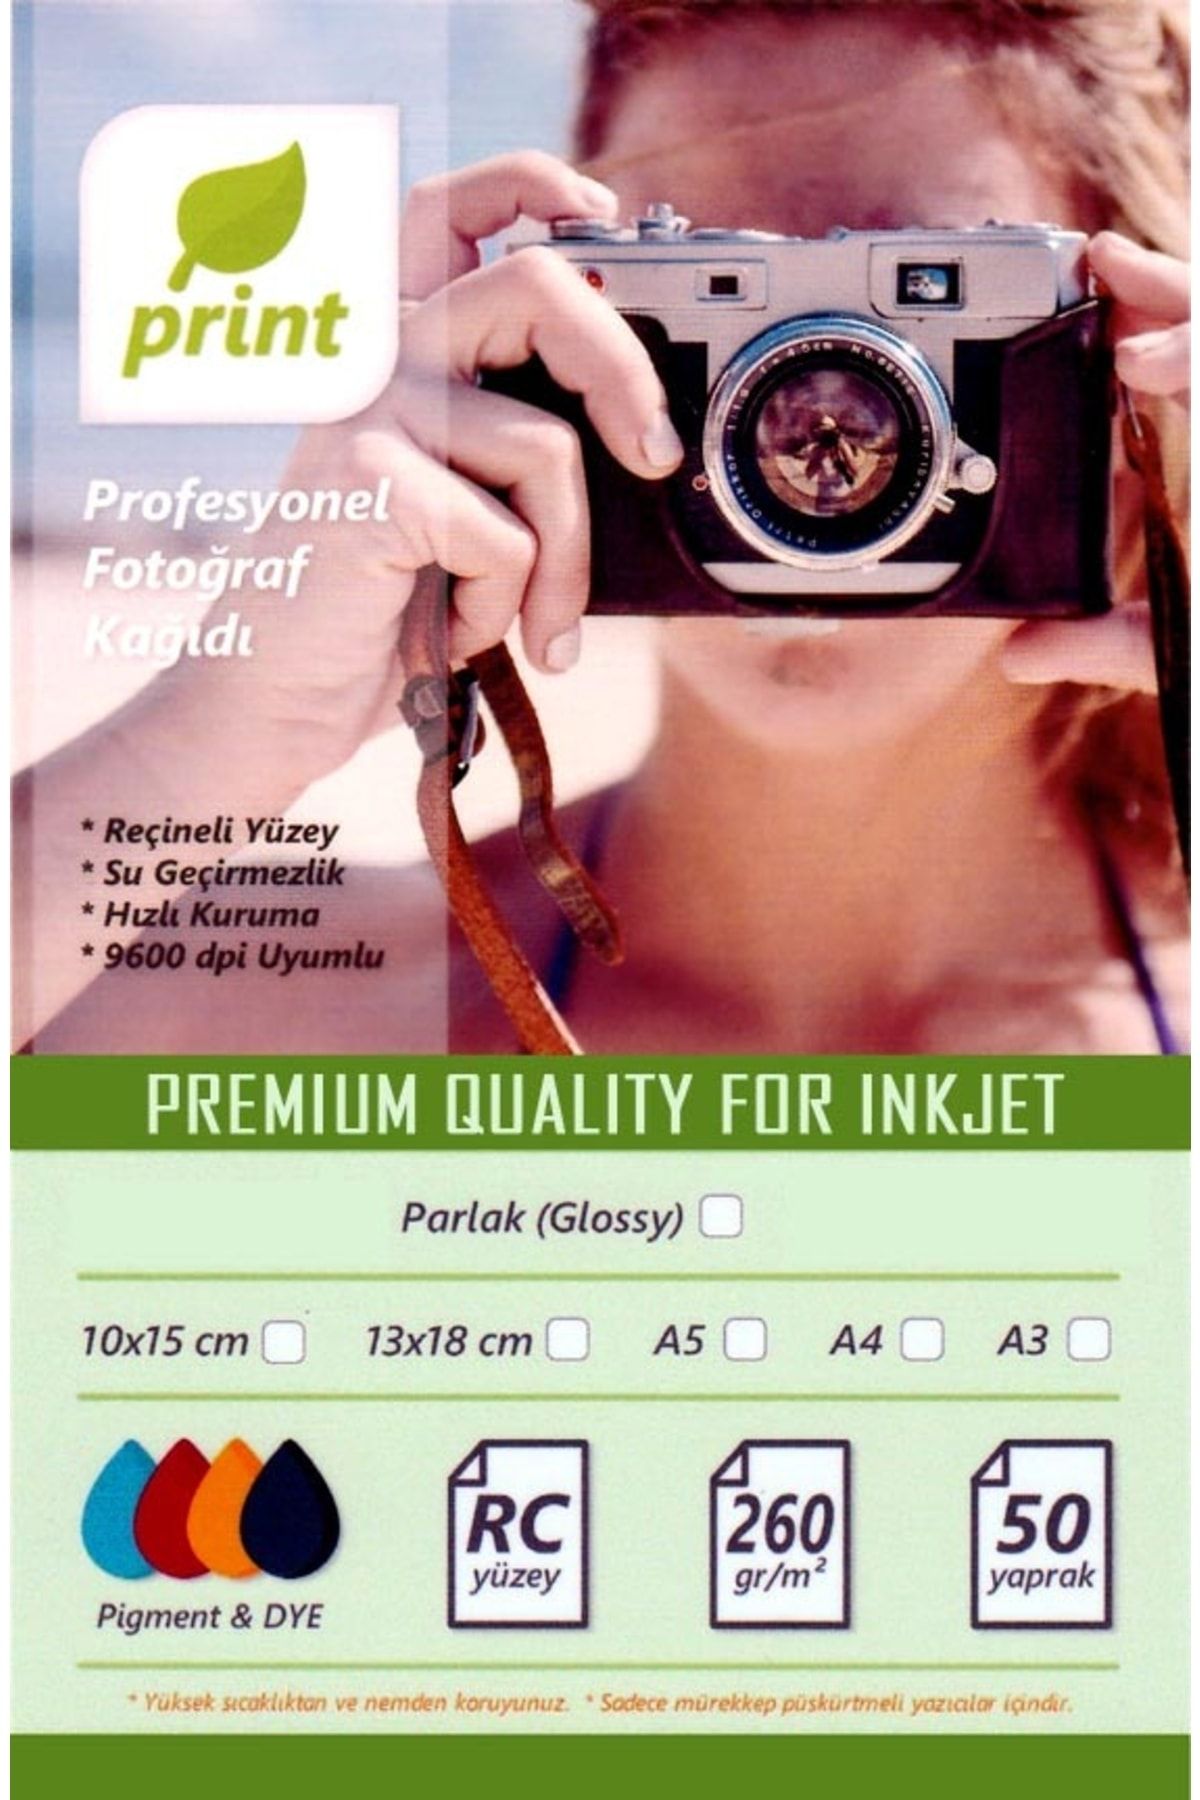 PRİNT Hp Smart 515 Premium Parlak Fotoğraf Kağıdı 10x15 50 Yp